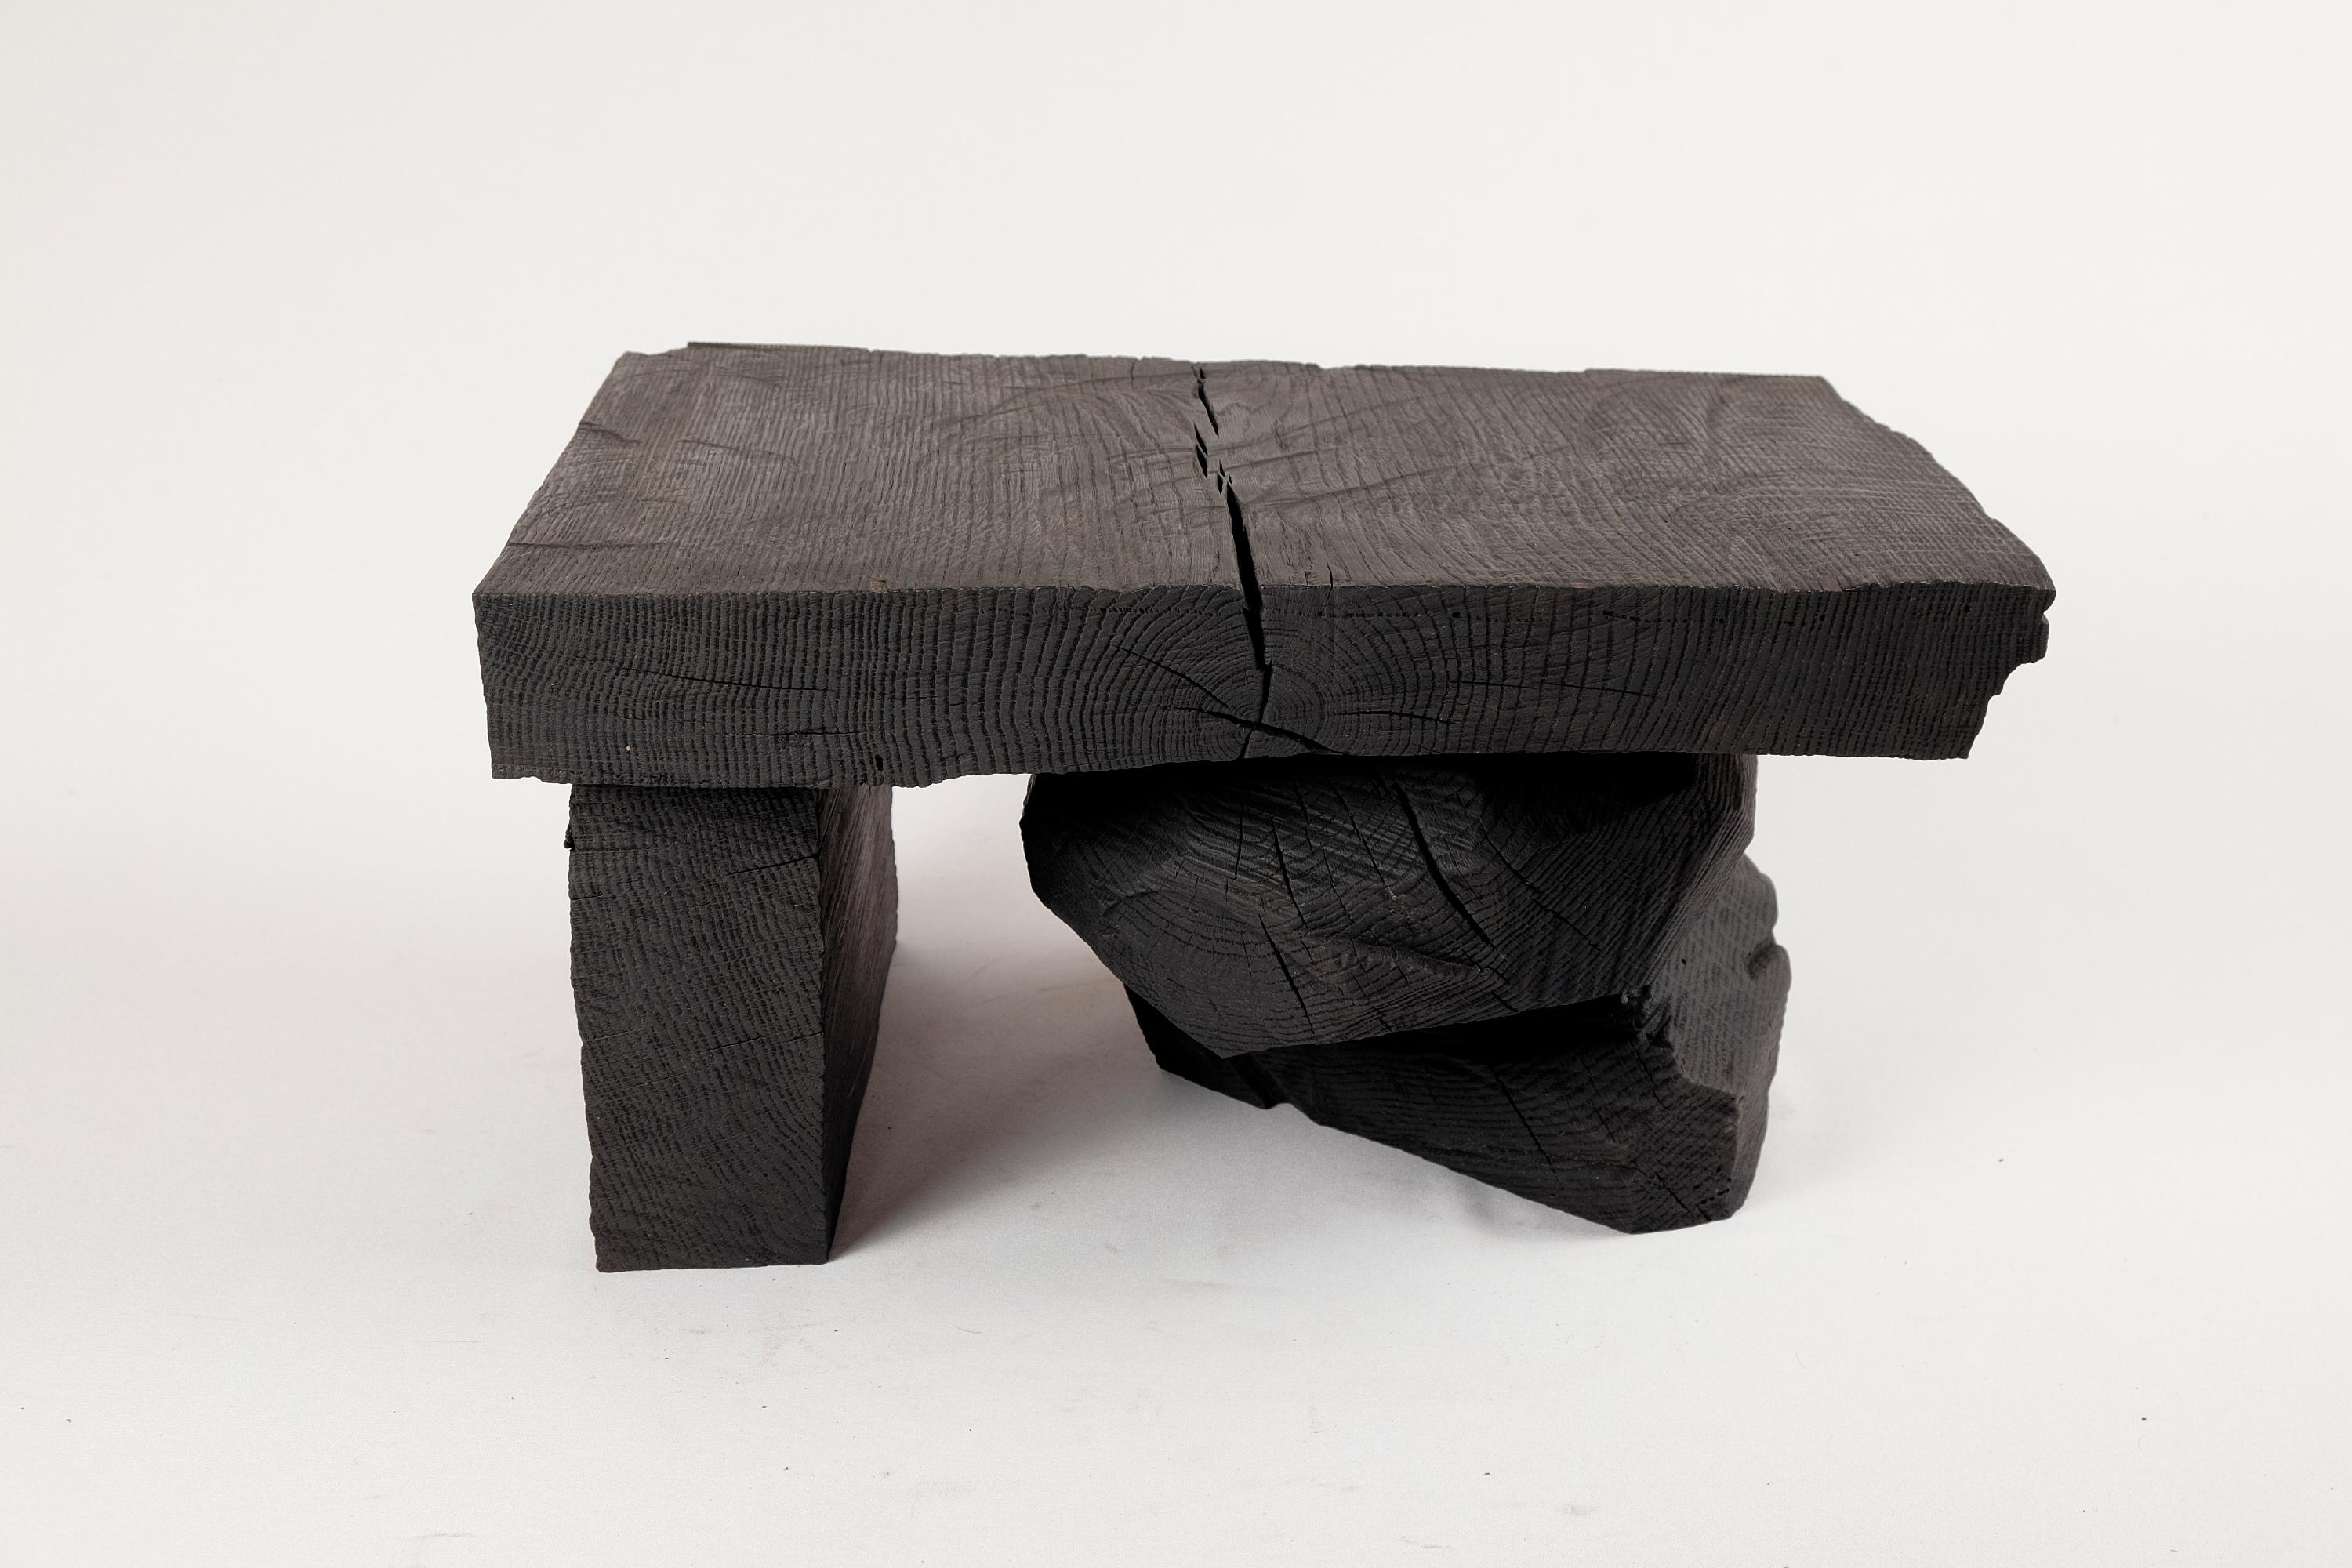 Rustic Solid Burnt Wood, Sculptural Side Table, Original Contemporary Design, Logniture For Sale